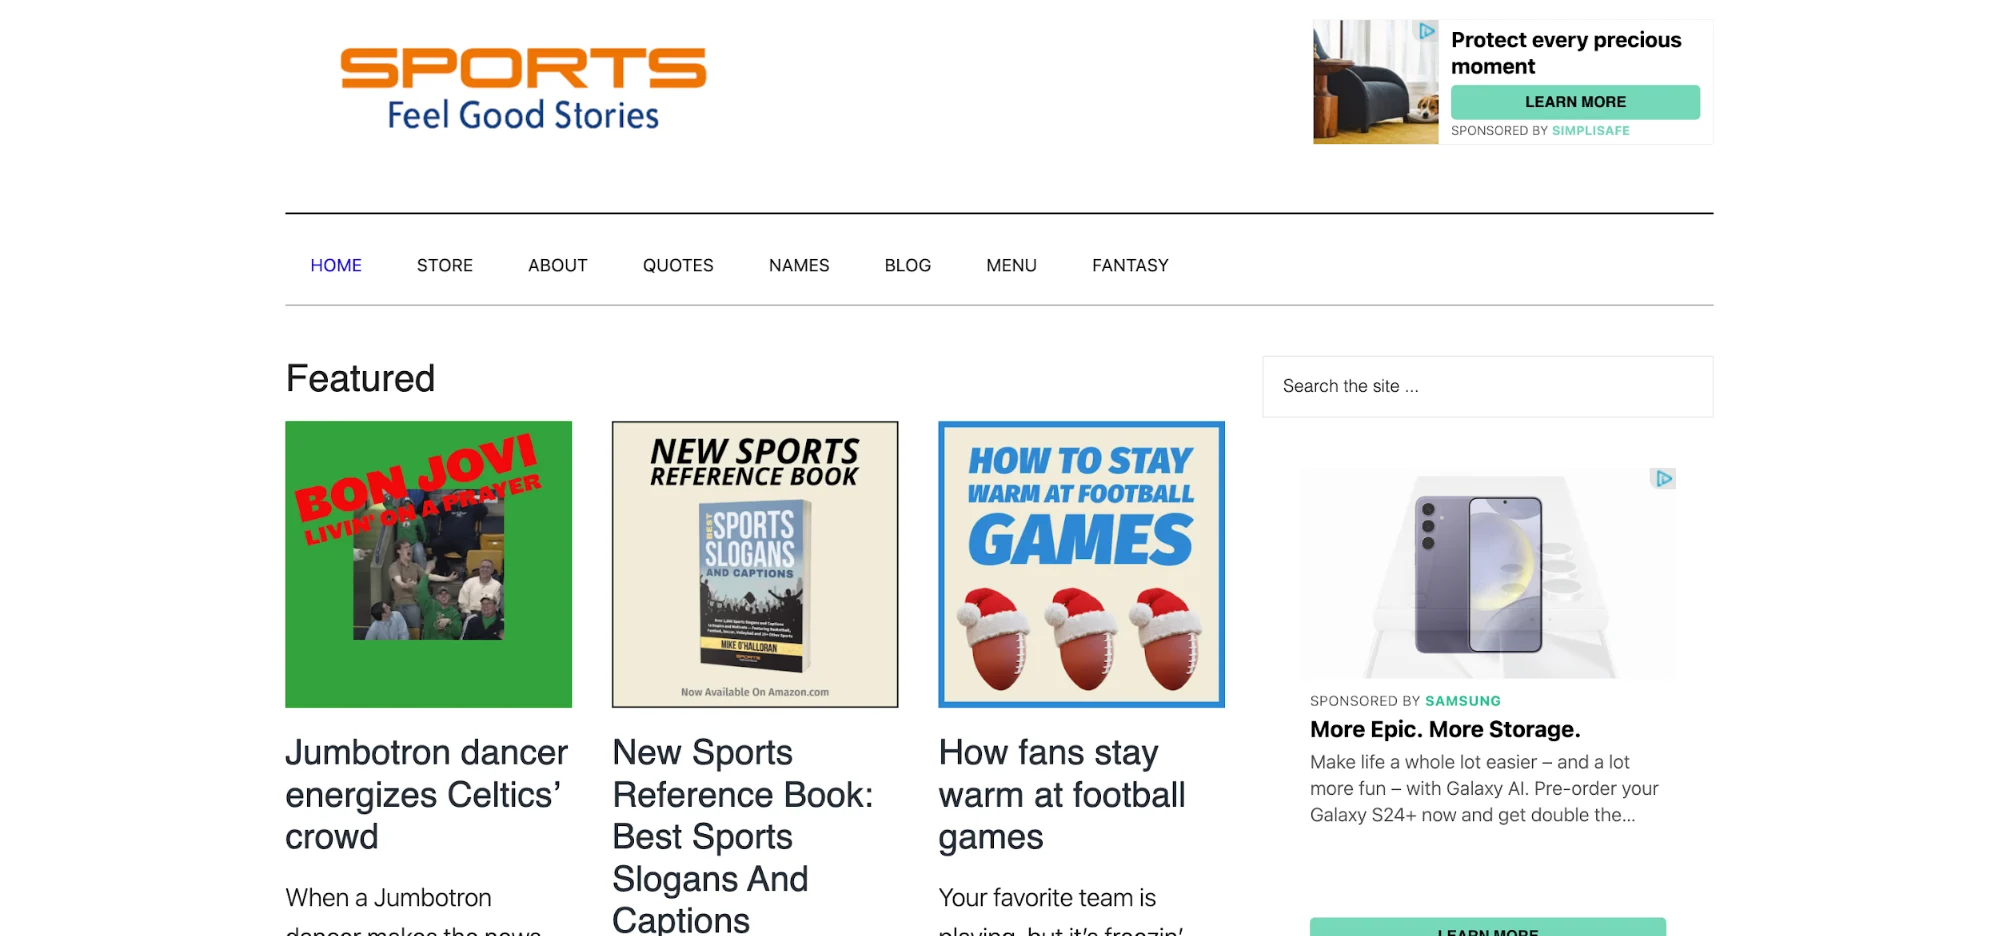 sports feel good stories blog